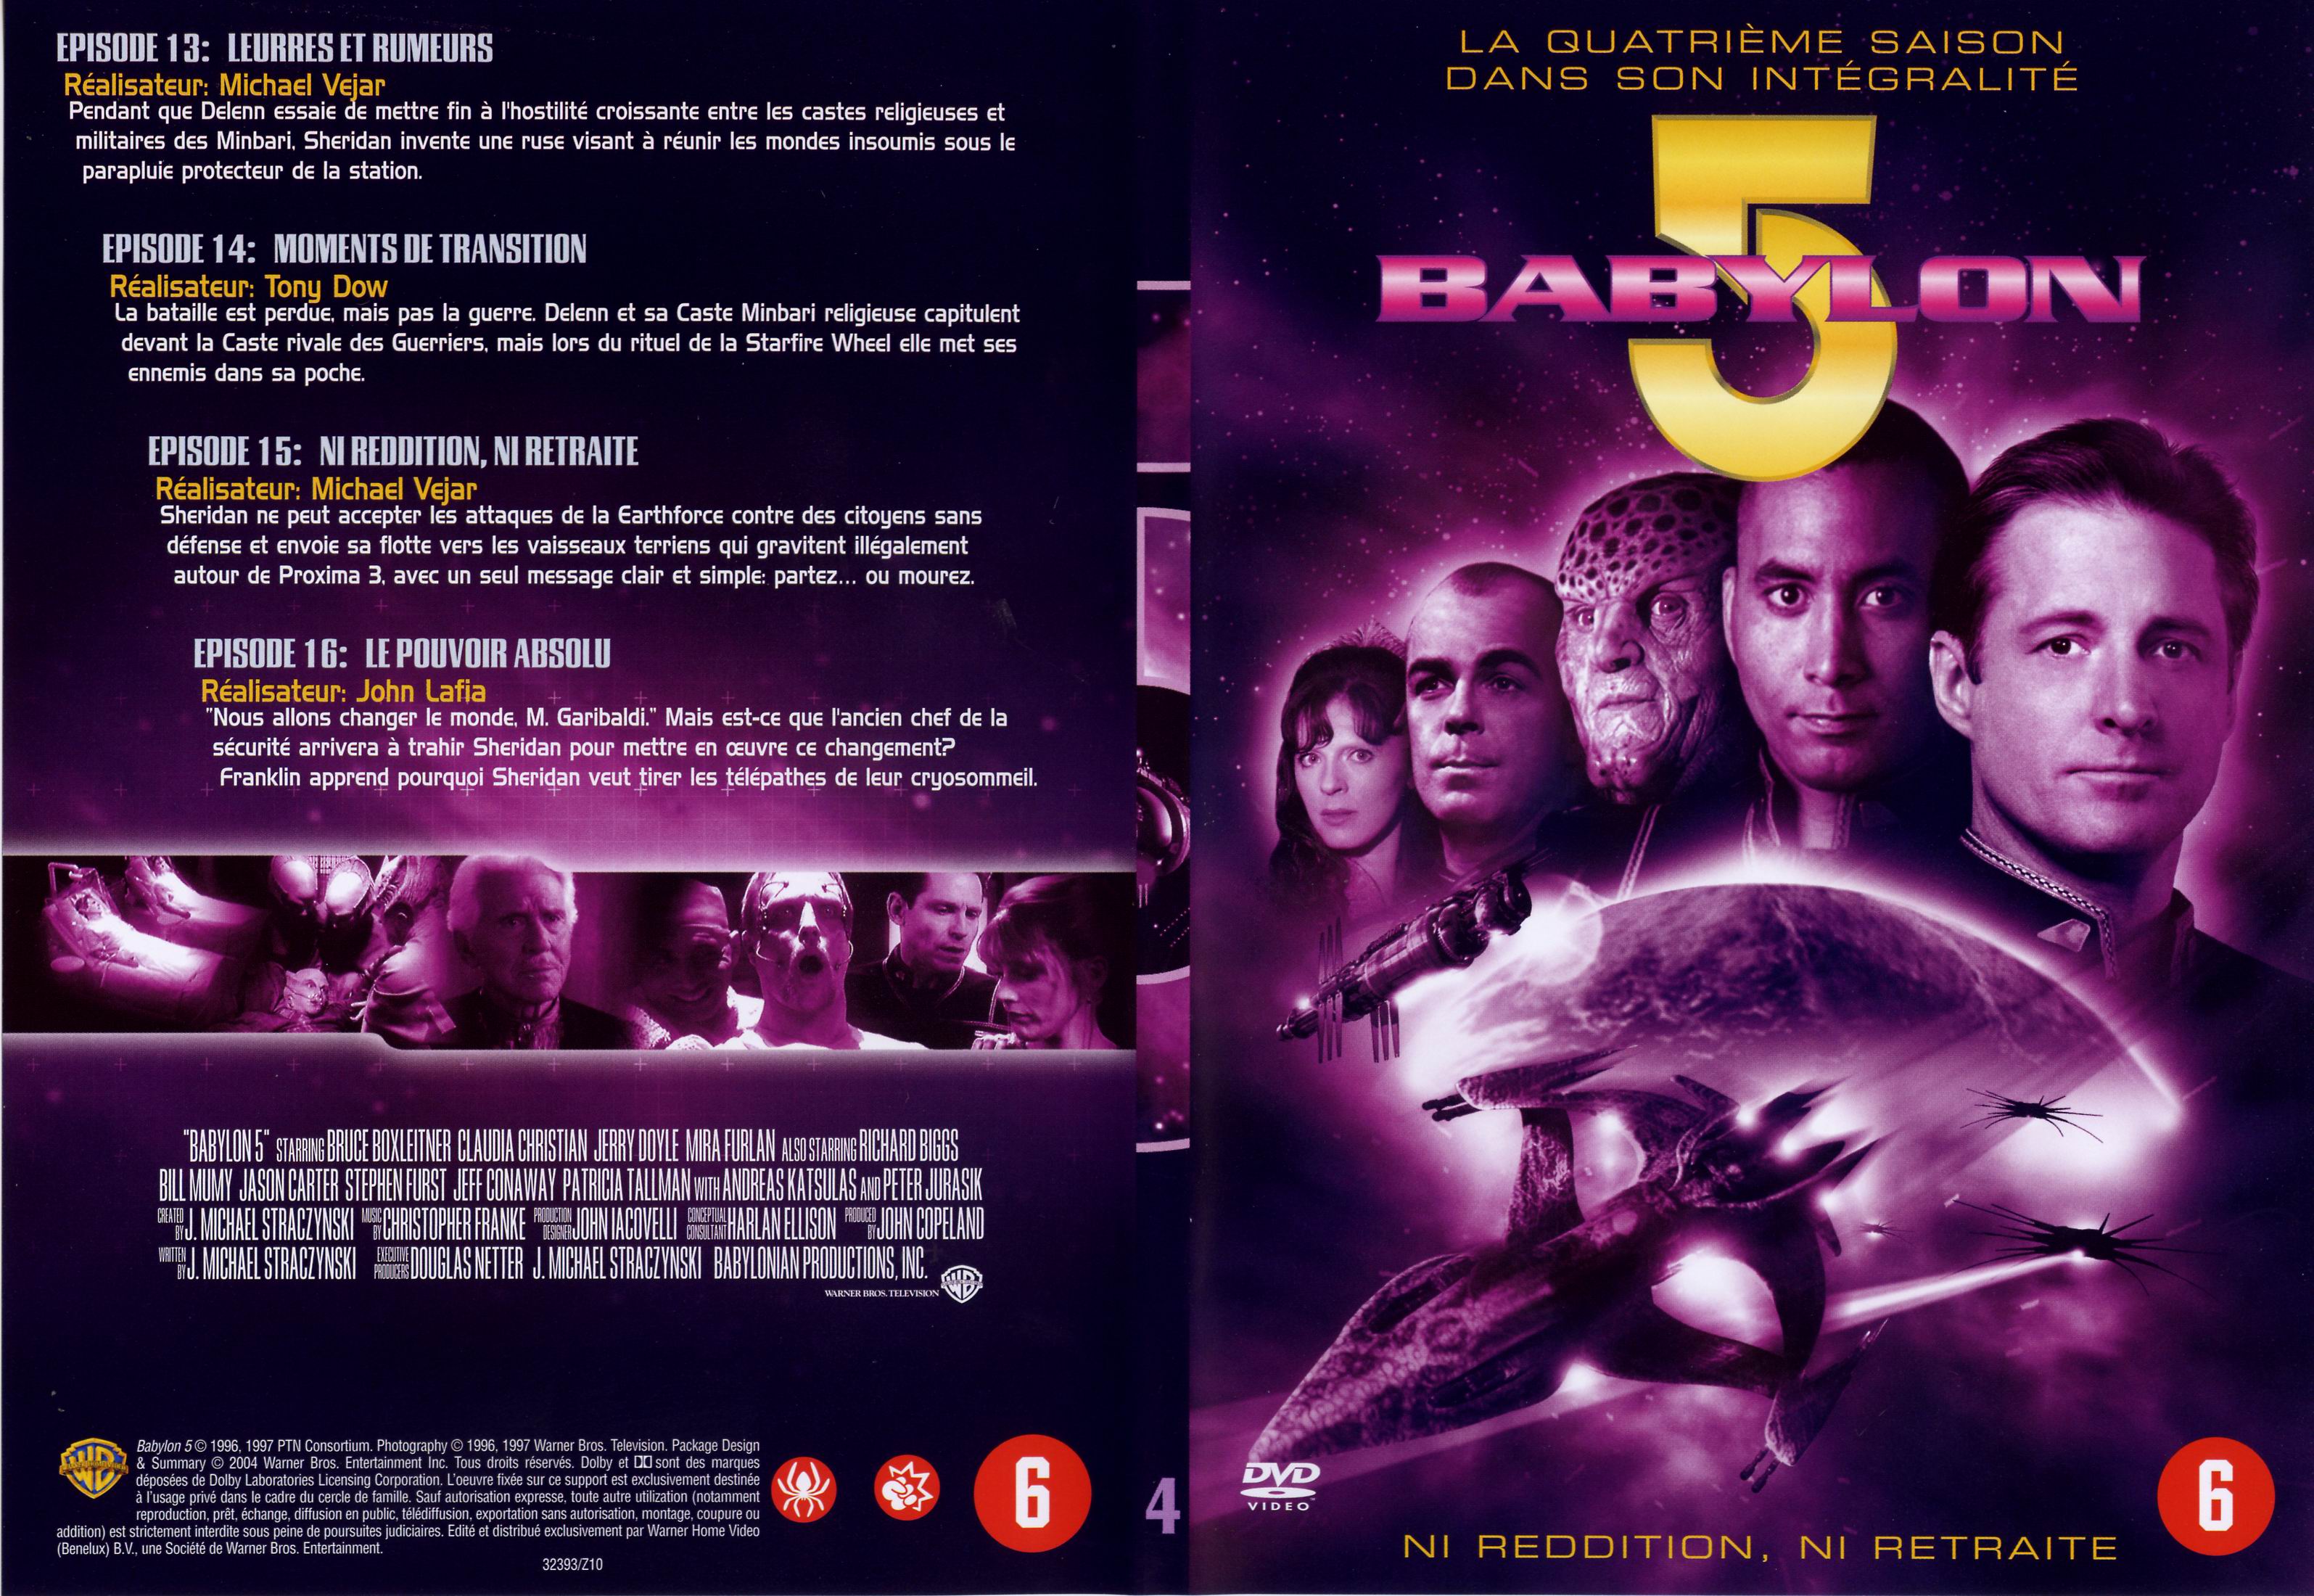 Jaquette DVD Babylon 5 saison 4 dvd 4